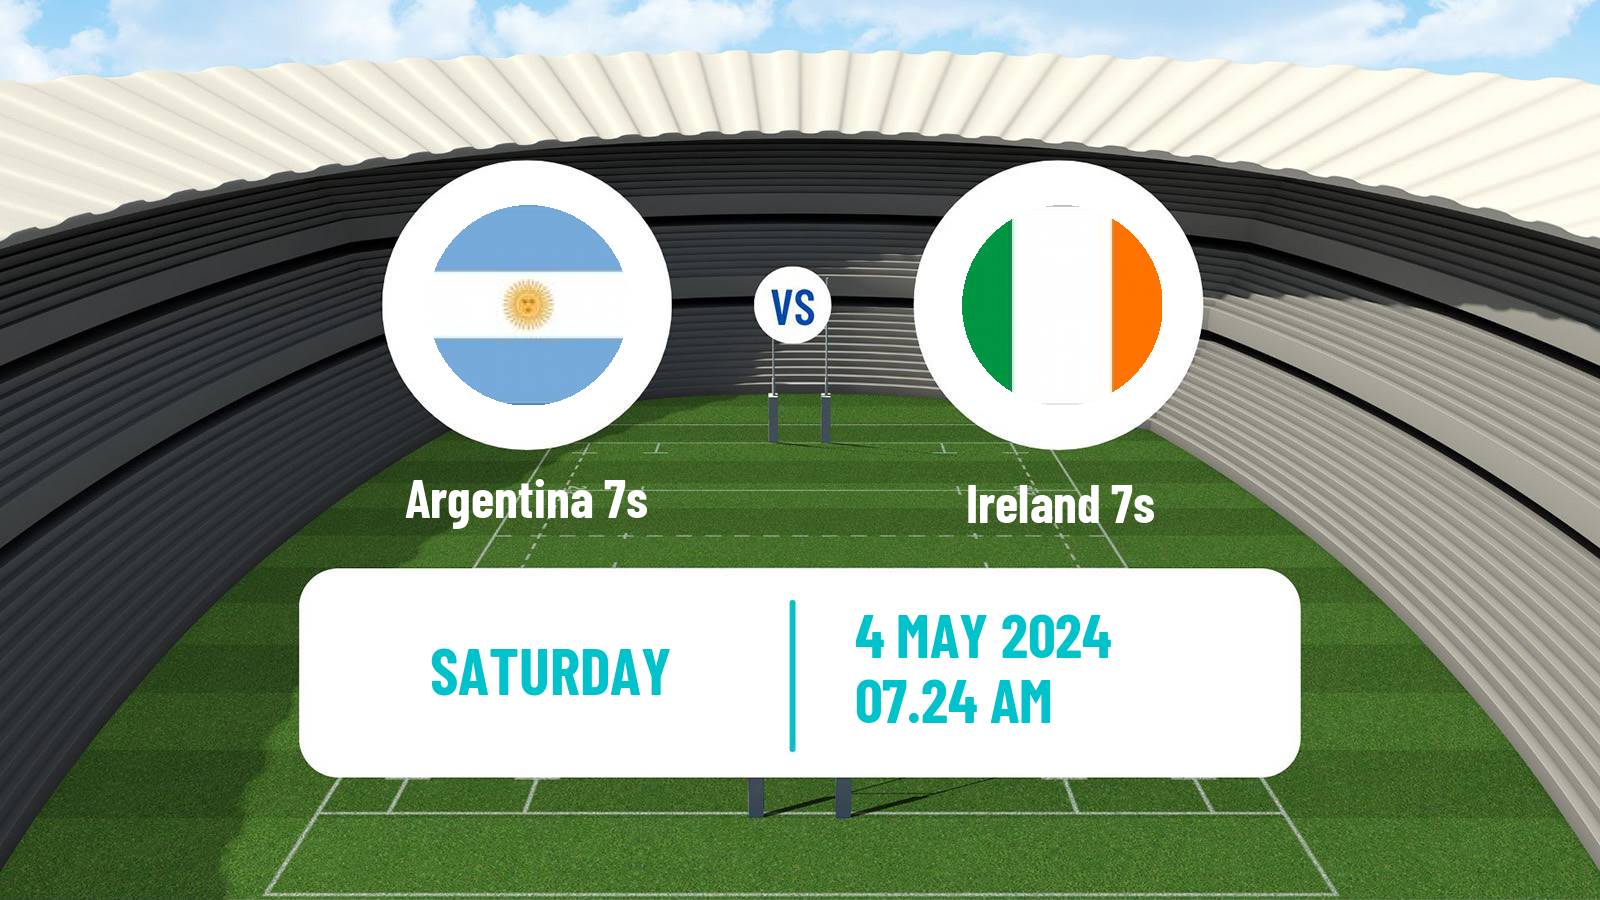 Rugby union Sevens World Series - Singapore Argentina 7s - Ireland 7s